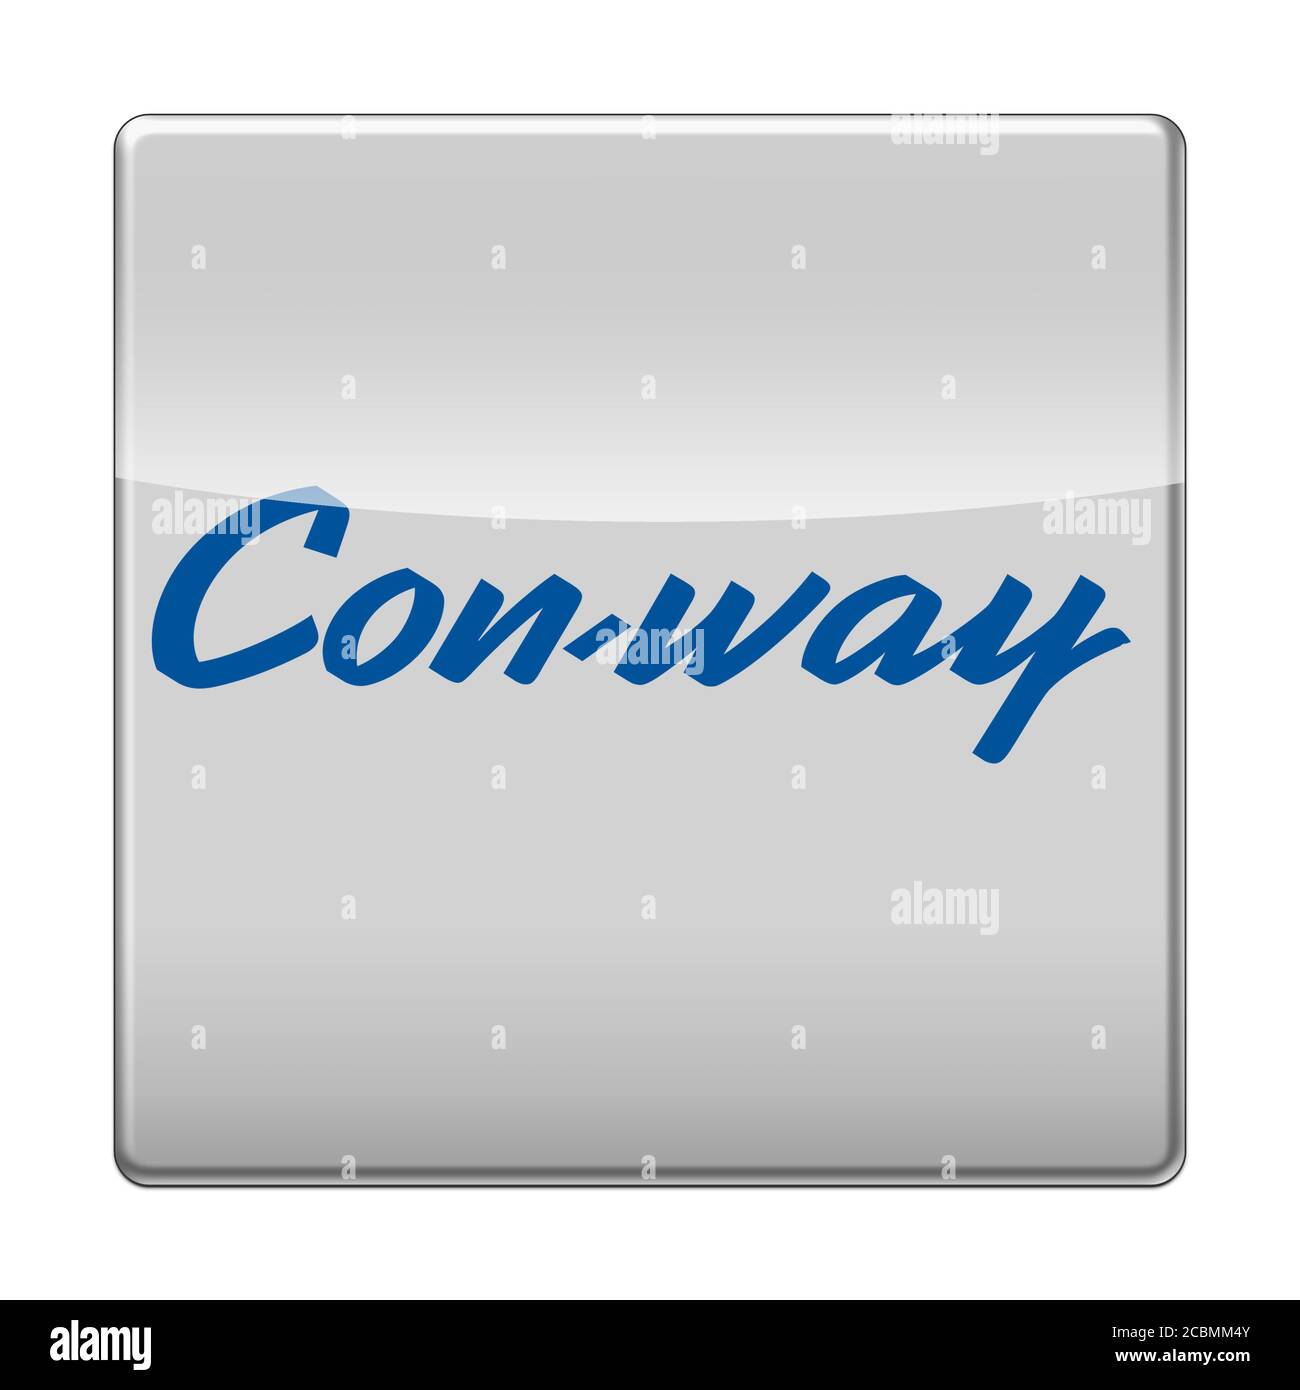 Con-way app icon logo Stock Photo